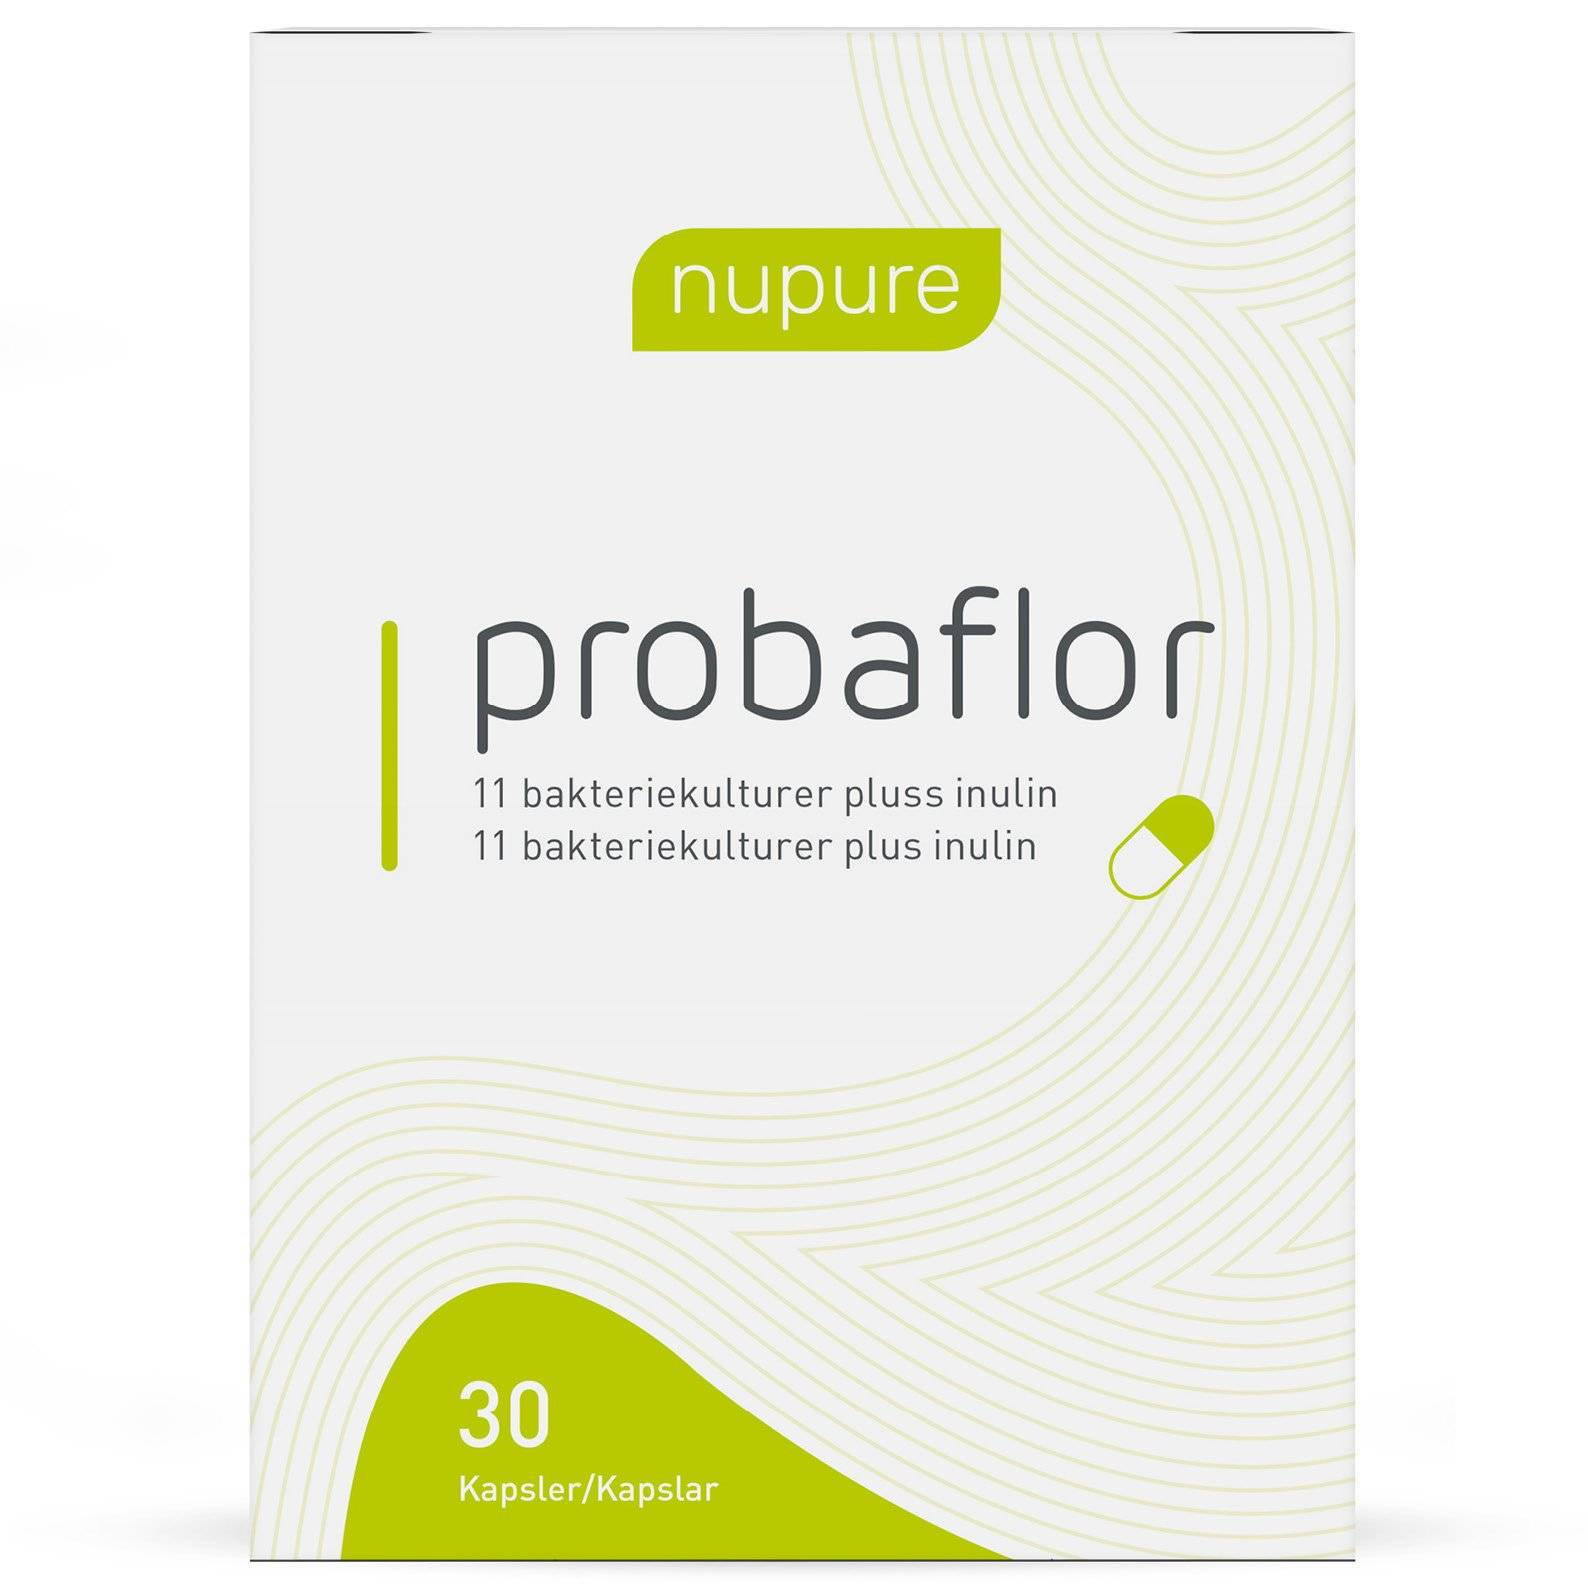 Probaflor - 30 kapsler - quantity-1